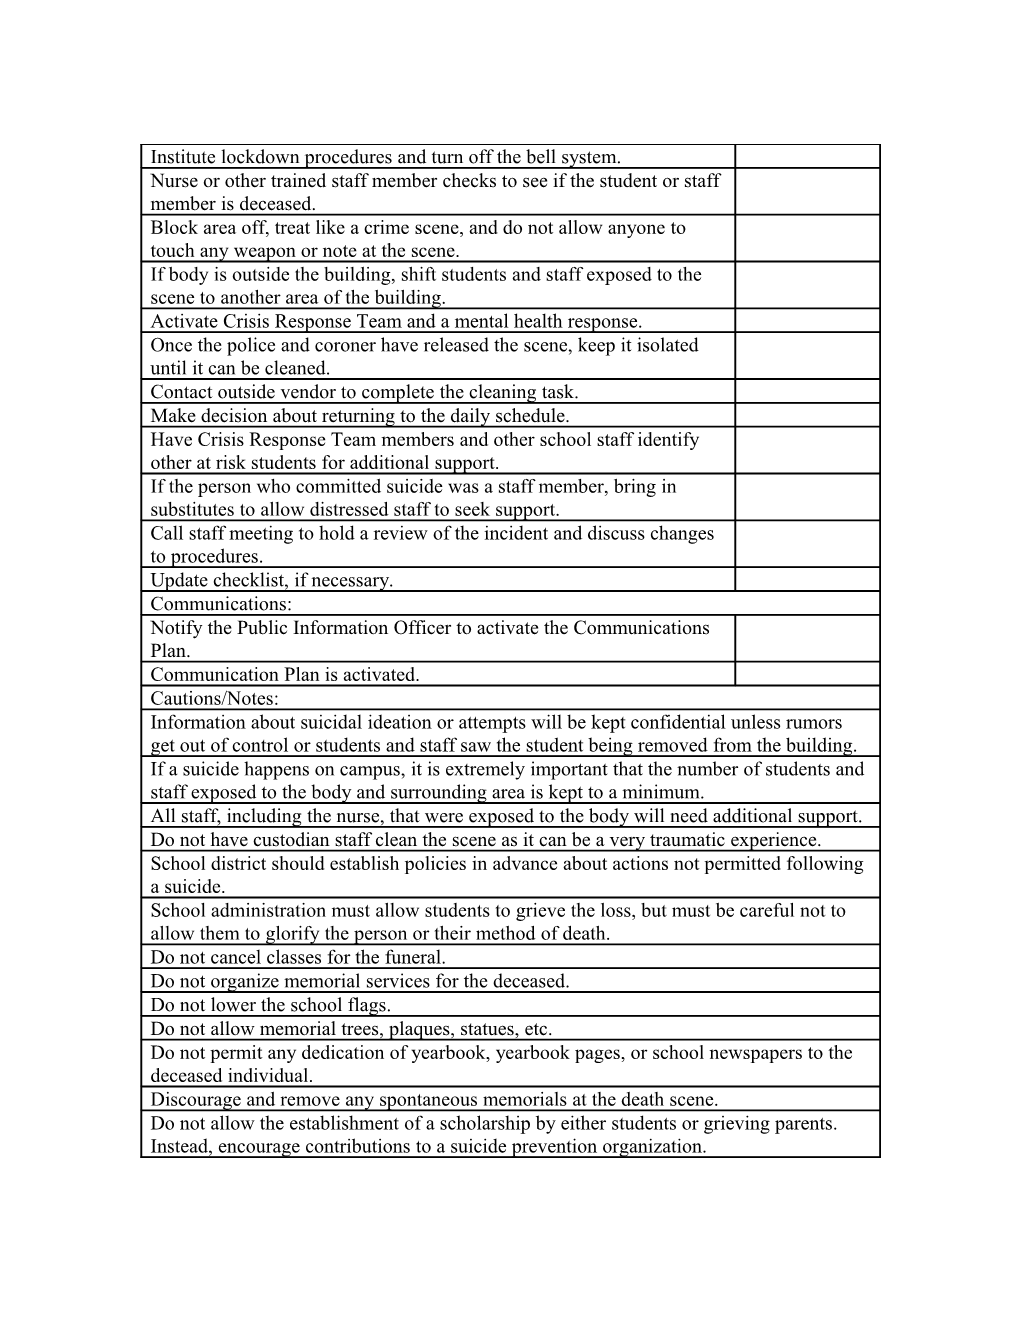 Sample Checklist for Suicide